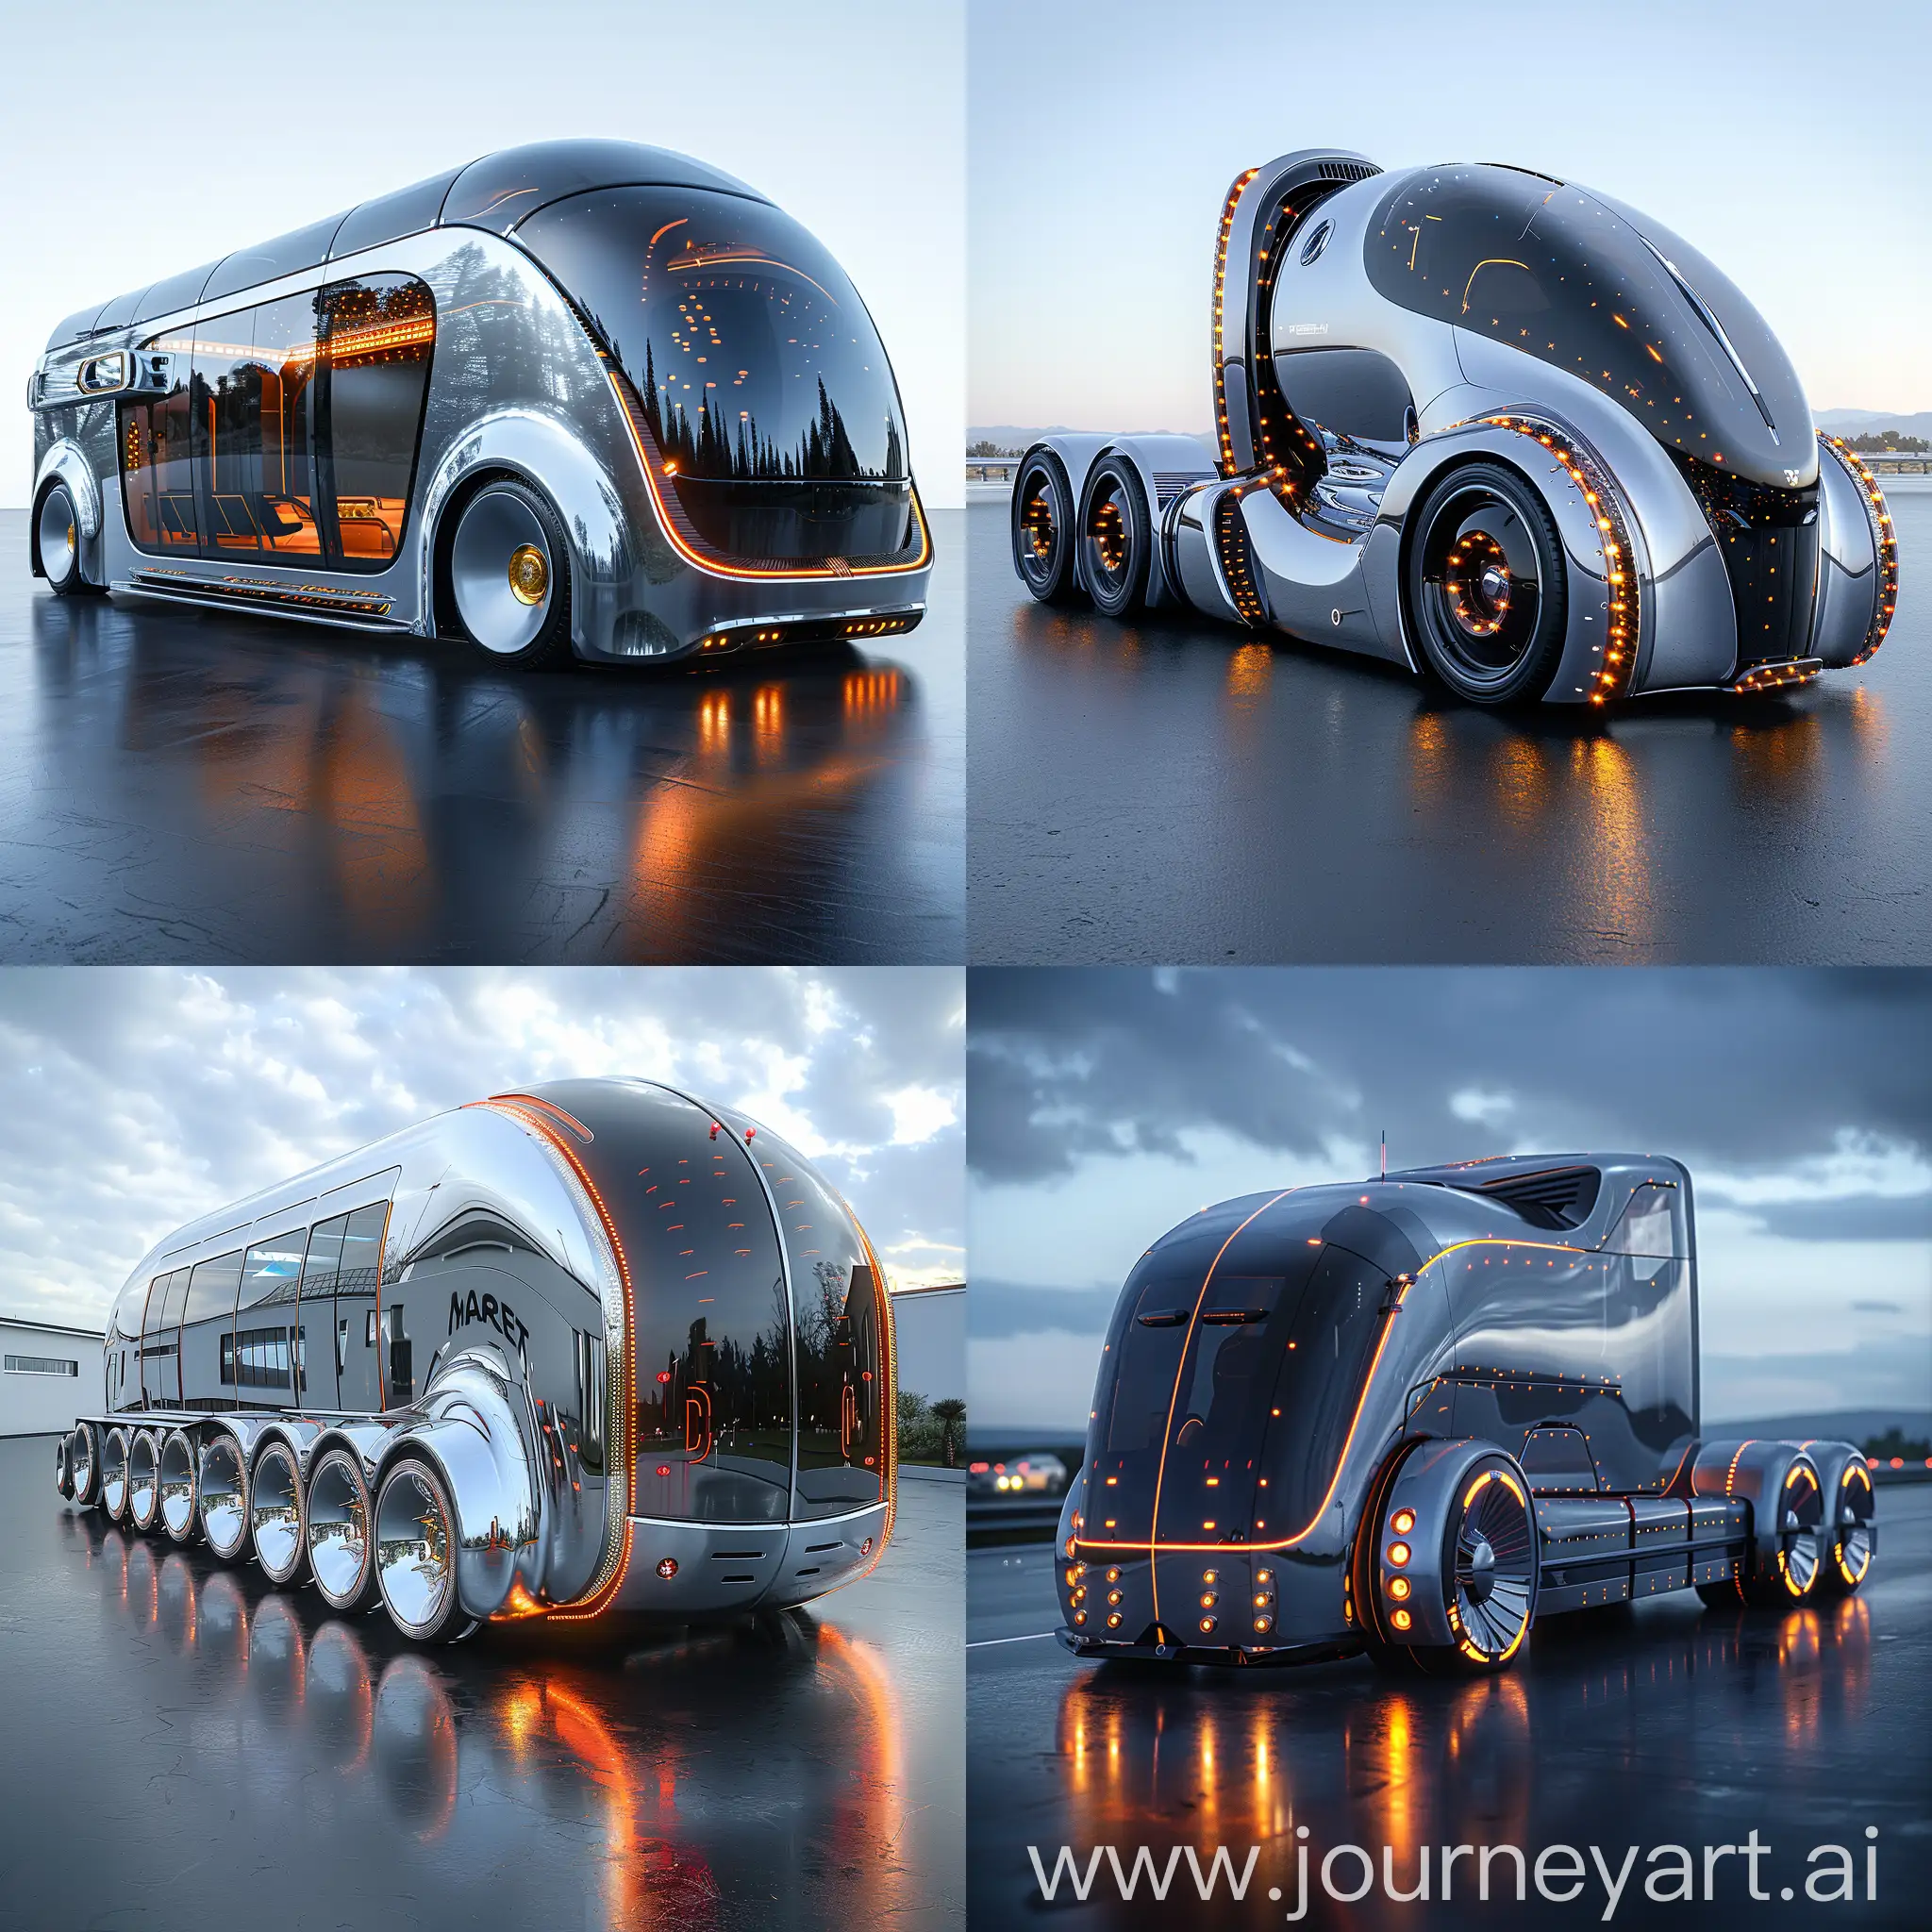 Futuristic-Stainless-Steel-Truck-with-Smart-Materials-High-Tech-Octane-Render